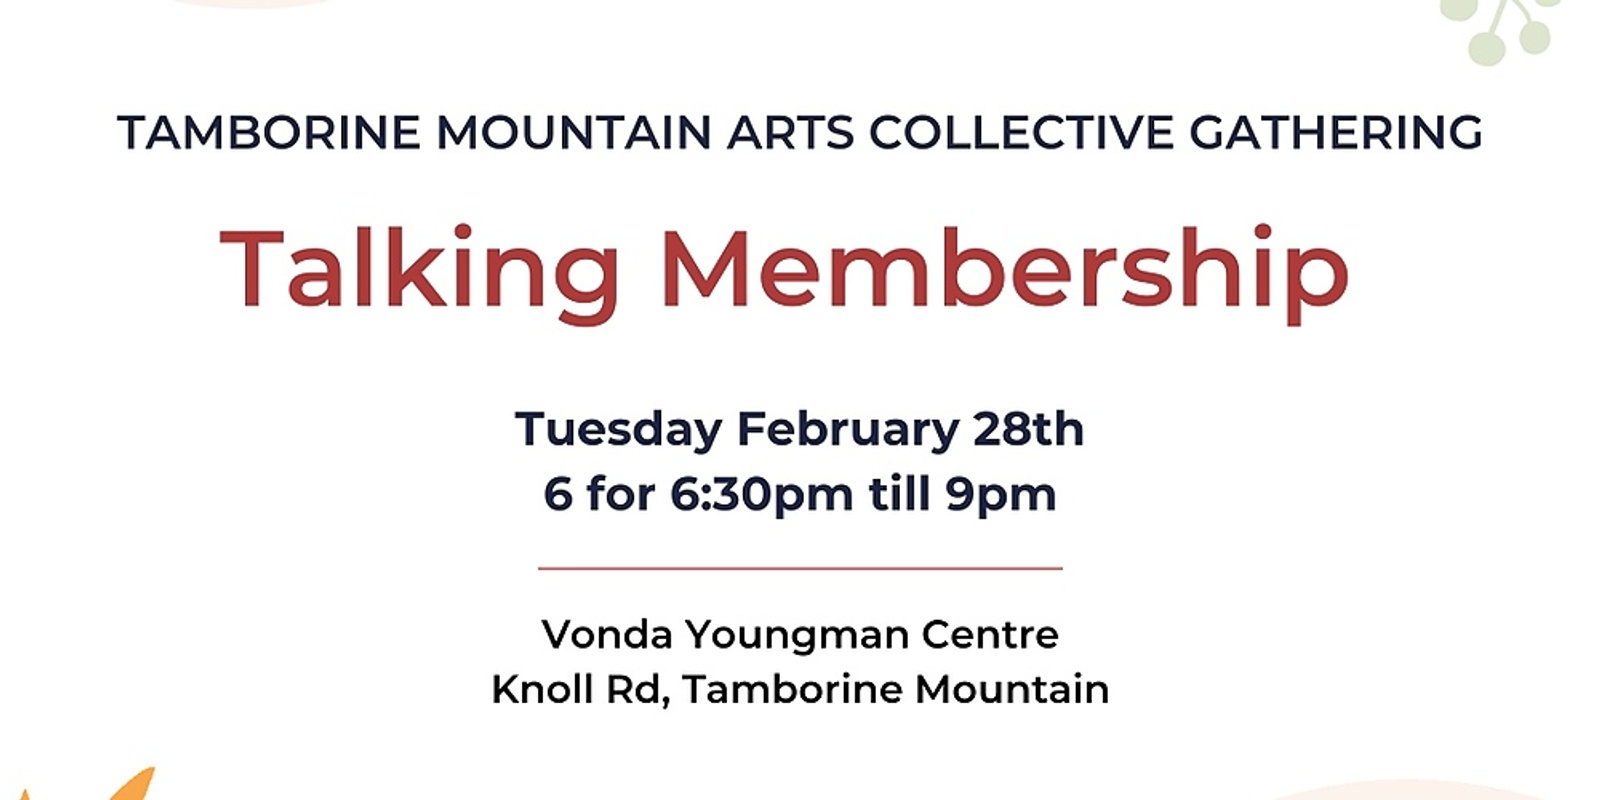 Banner image for Tamborine Mountain Arts Collective Gathering - Talking Membership